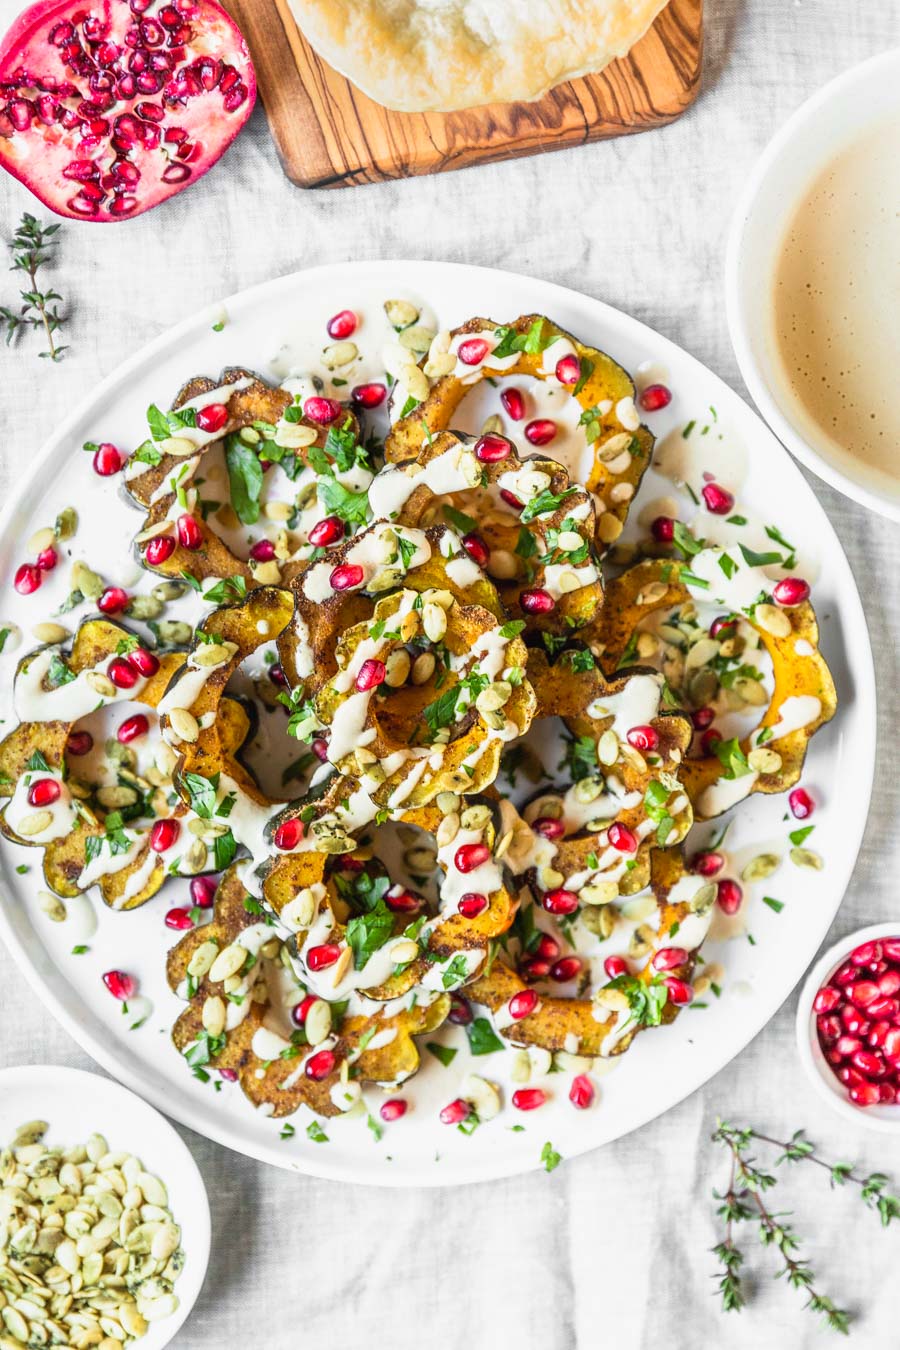 Garam Masala Roasted Acorn Squash recipe from The Ultimate Vegan Cookbook, Photo by Kari of Beautiful Ingredient. #vegan #gluten-free #thanksgiving #holiday #squash #pomegranate #tahini